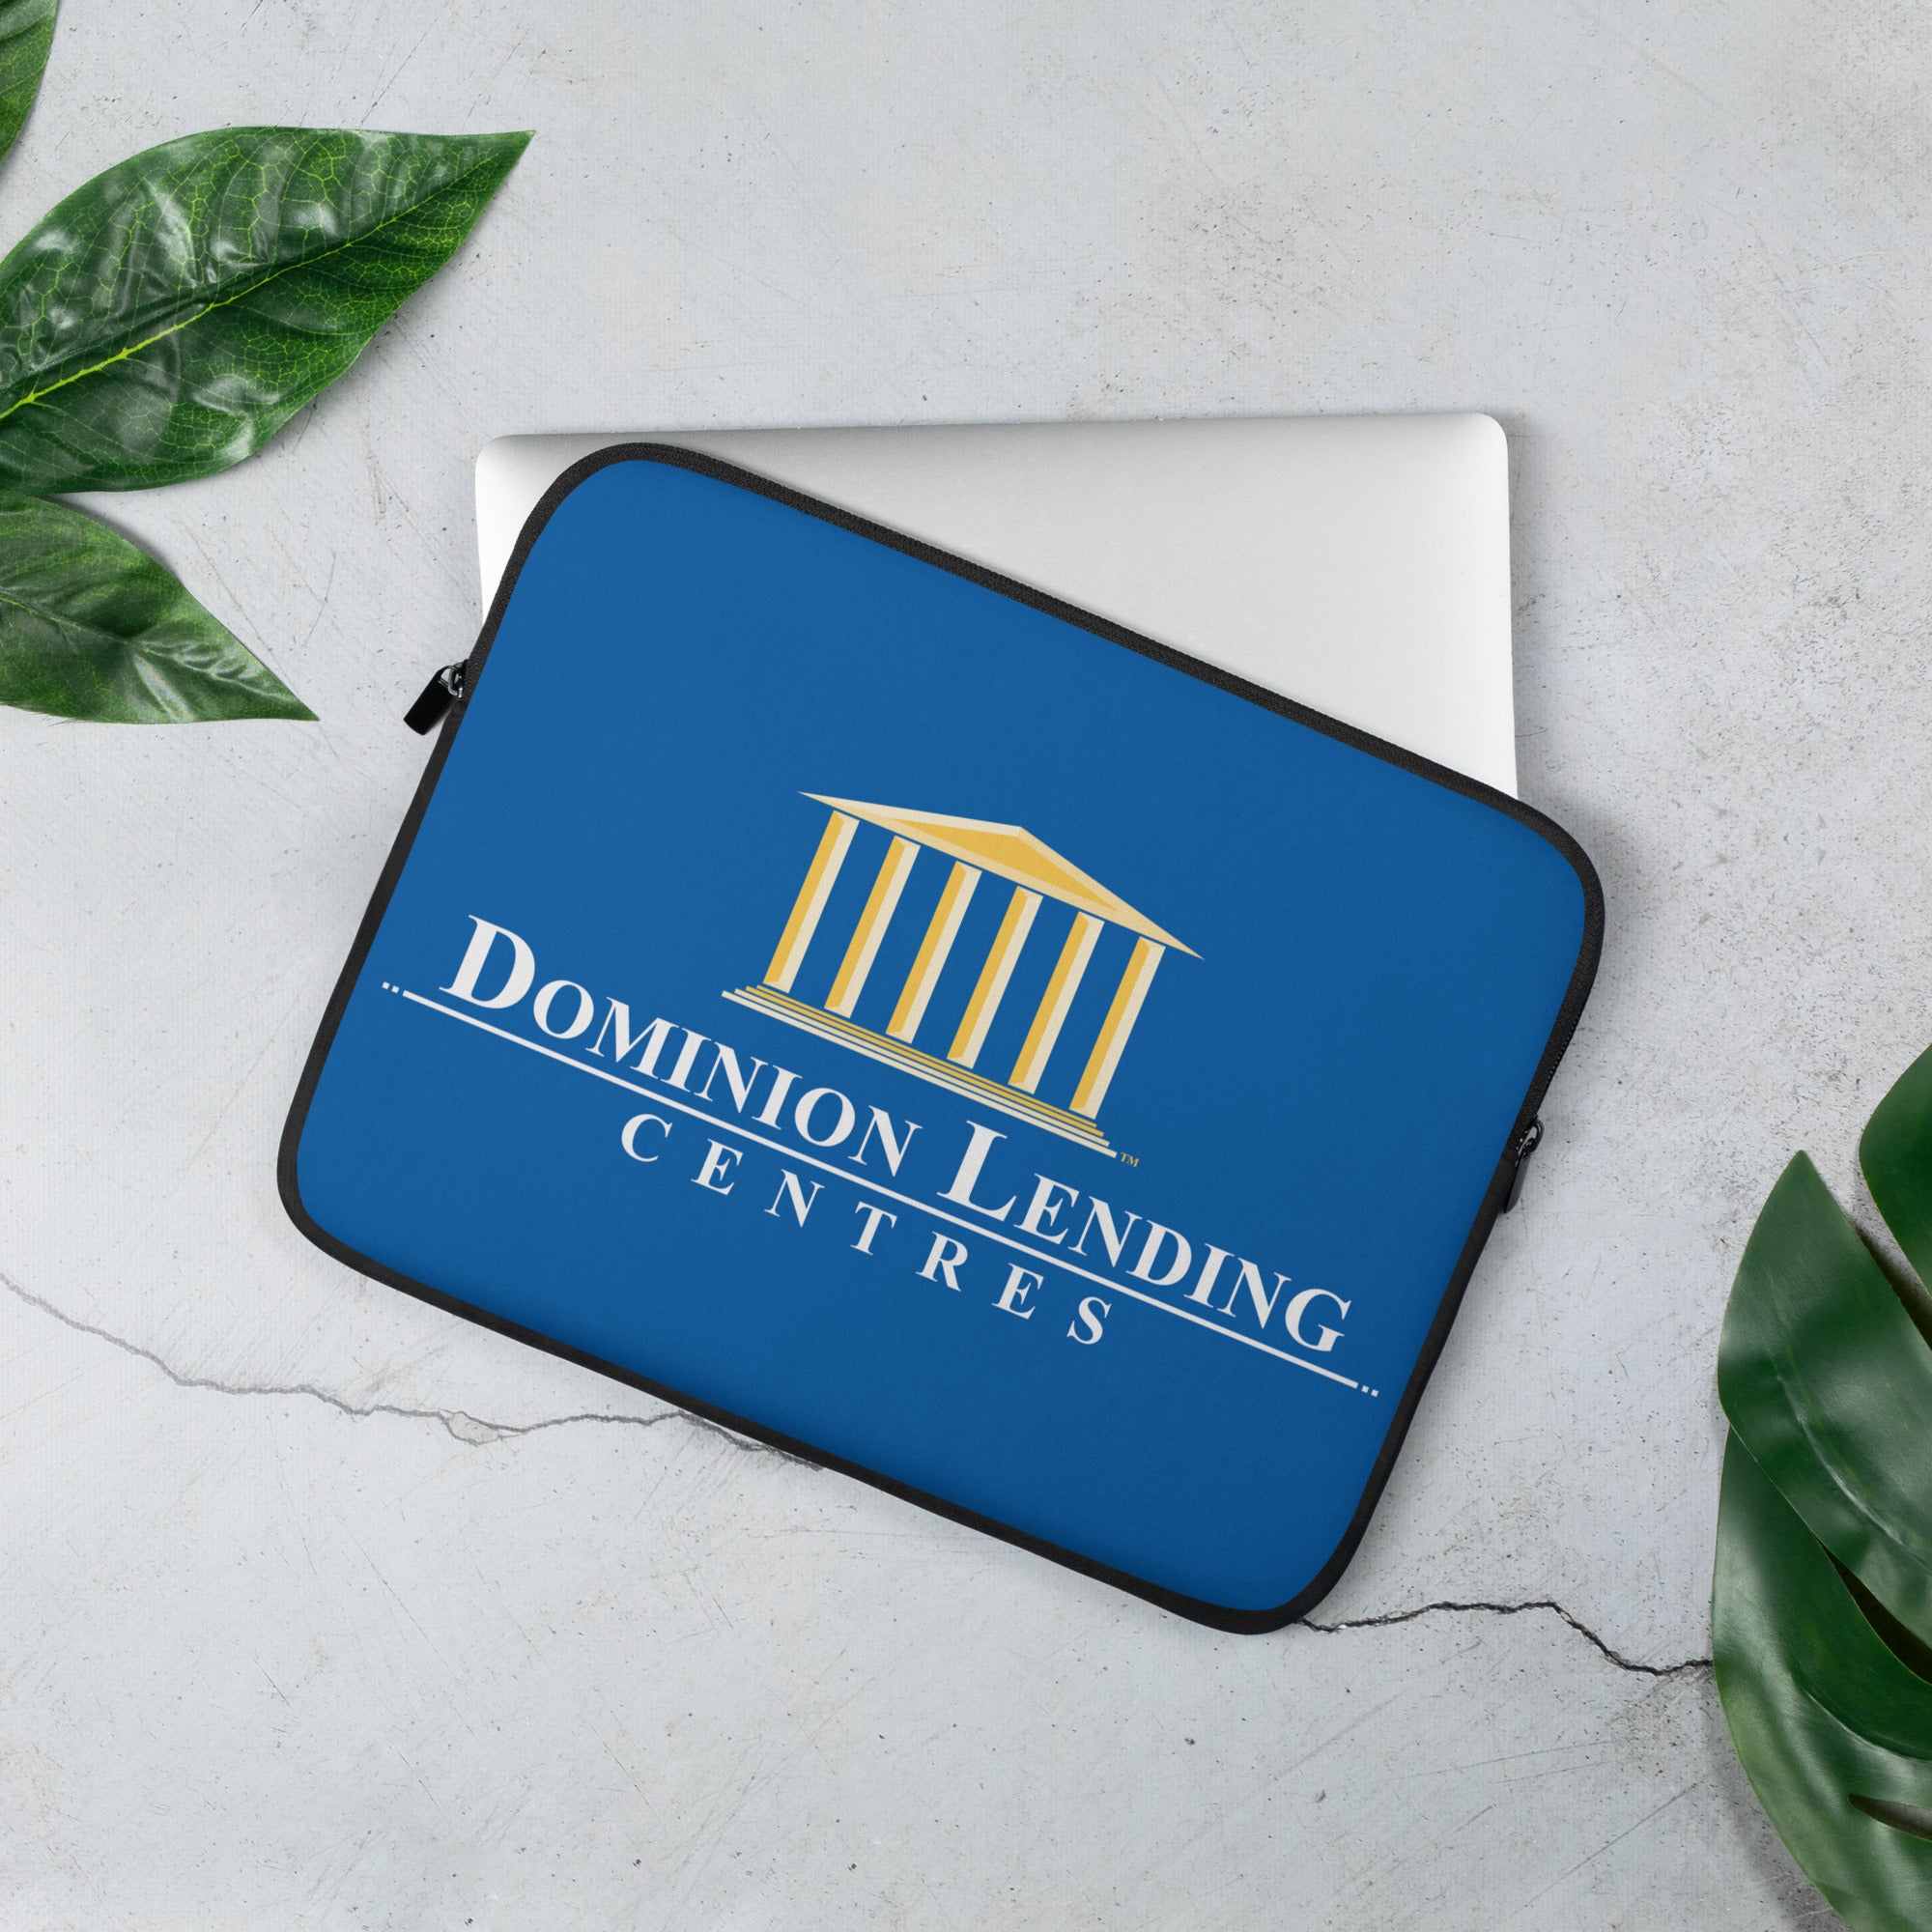 Dominion Lending Centres Laptop Sleeve